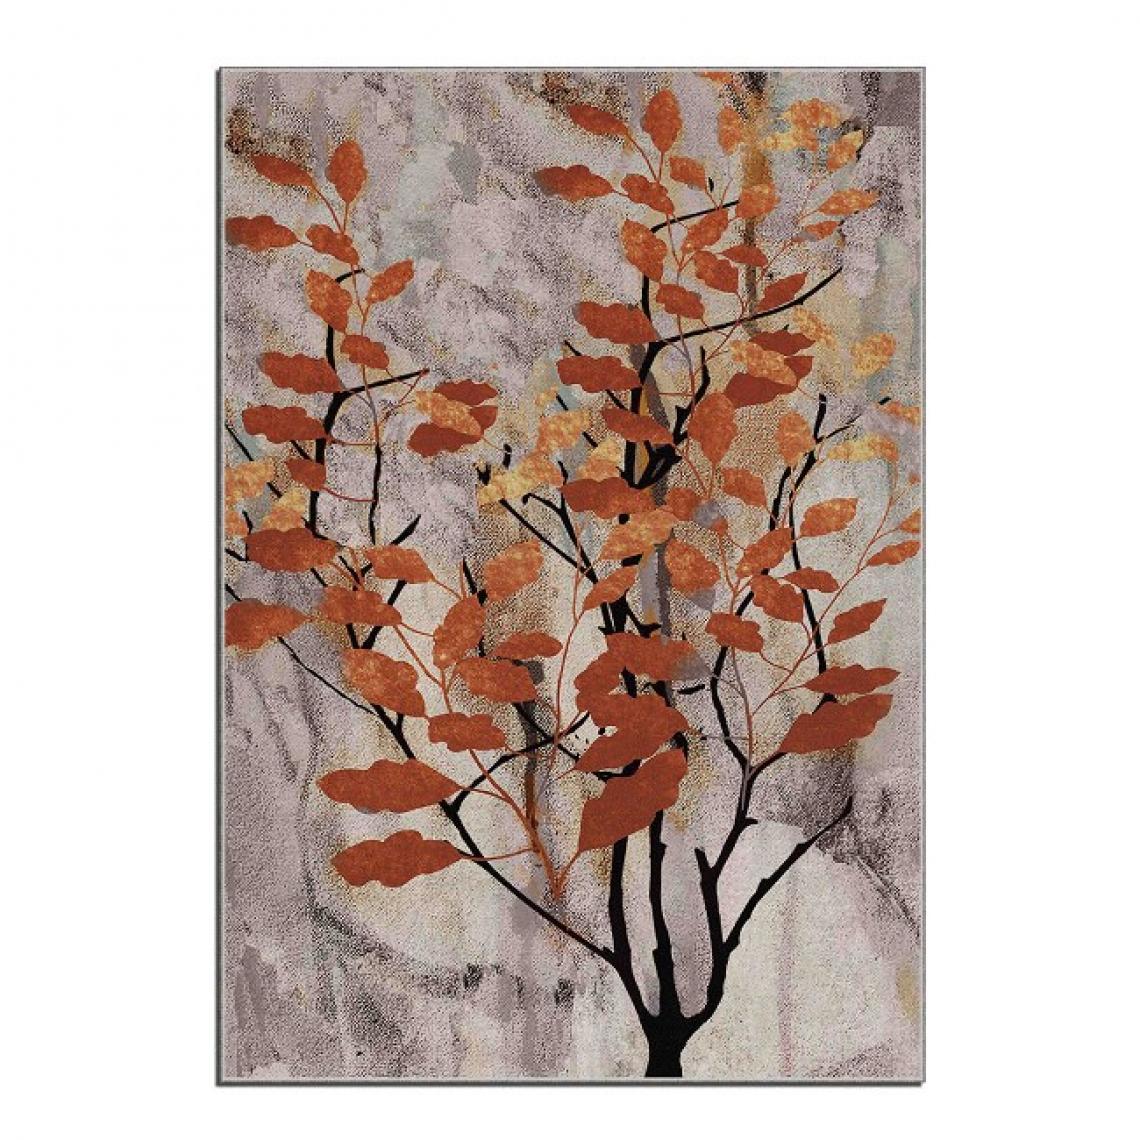 Homemania - HOMEMANIA Tapis décoratif Forest 2 - Gris, Marron - 120 x 180 cm - Tapis